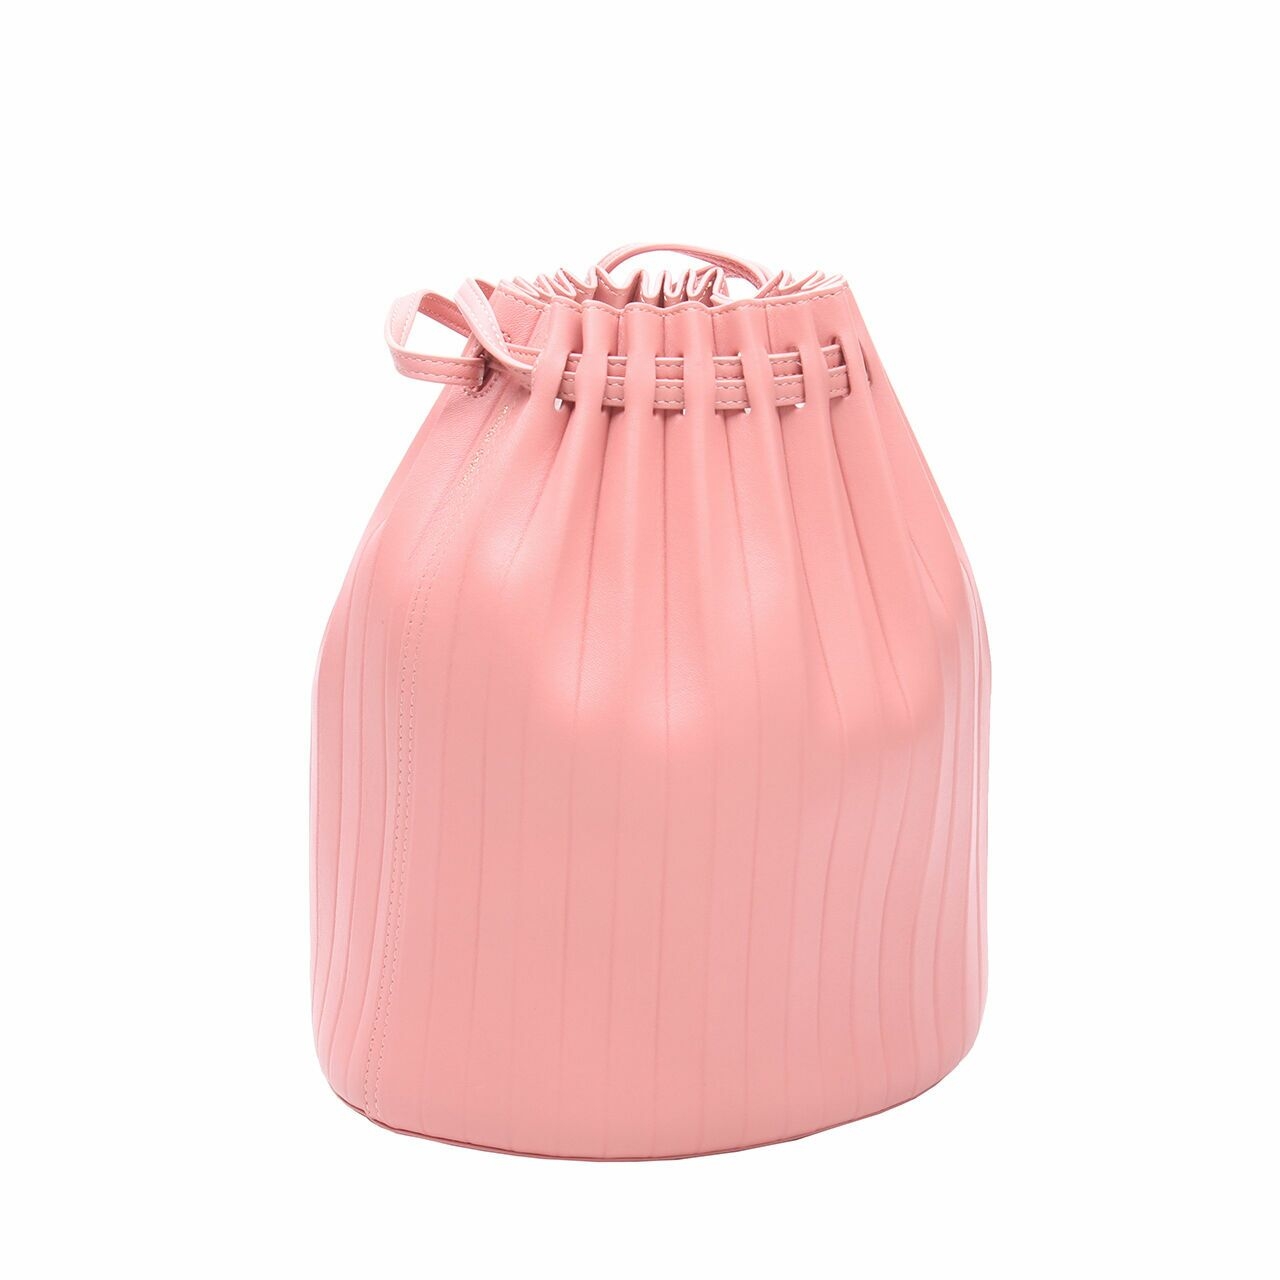 Mansur Gavriel Pleated Pink Blush Bucket Bag